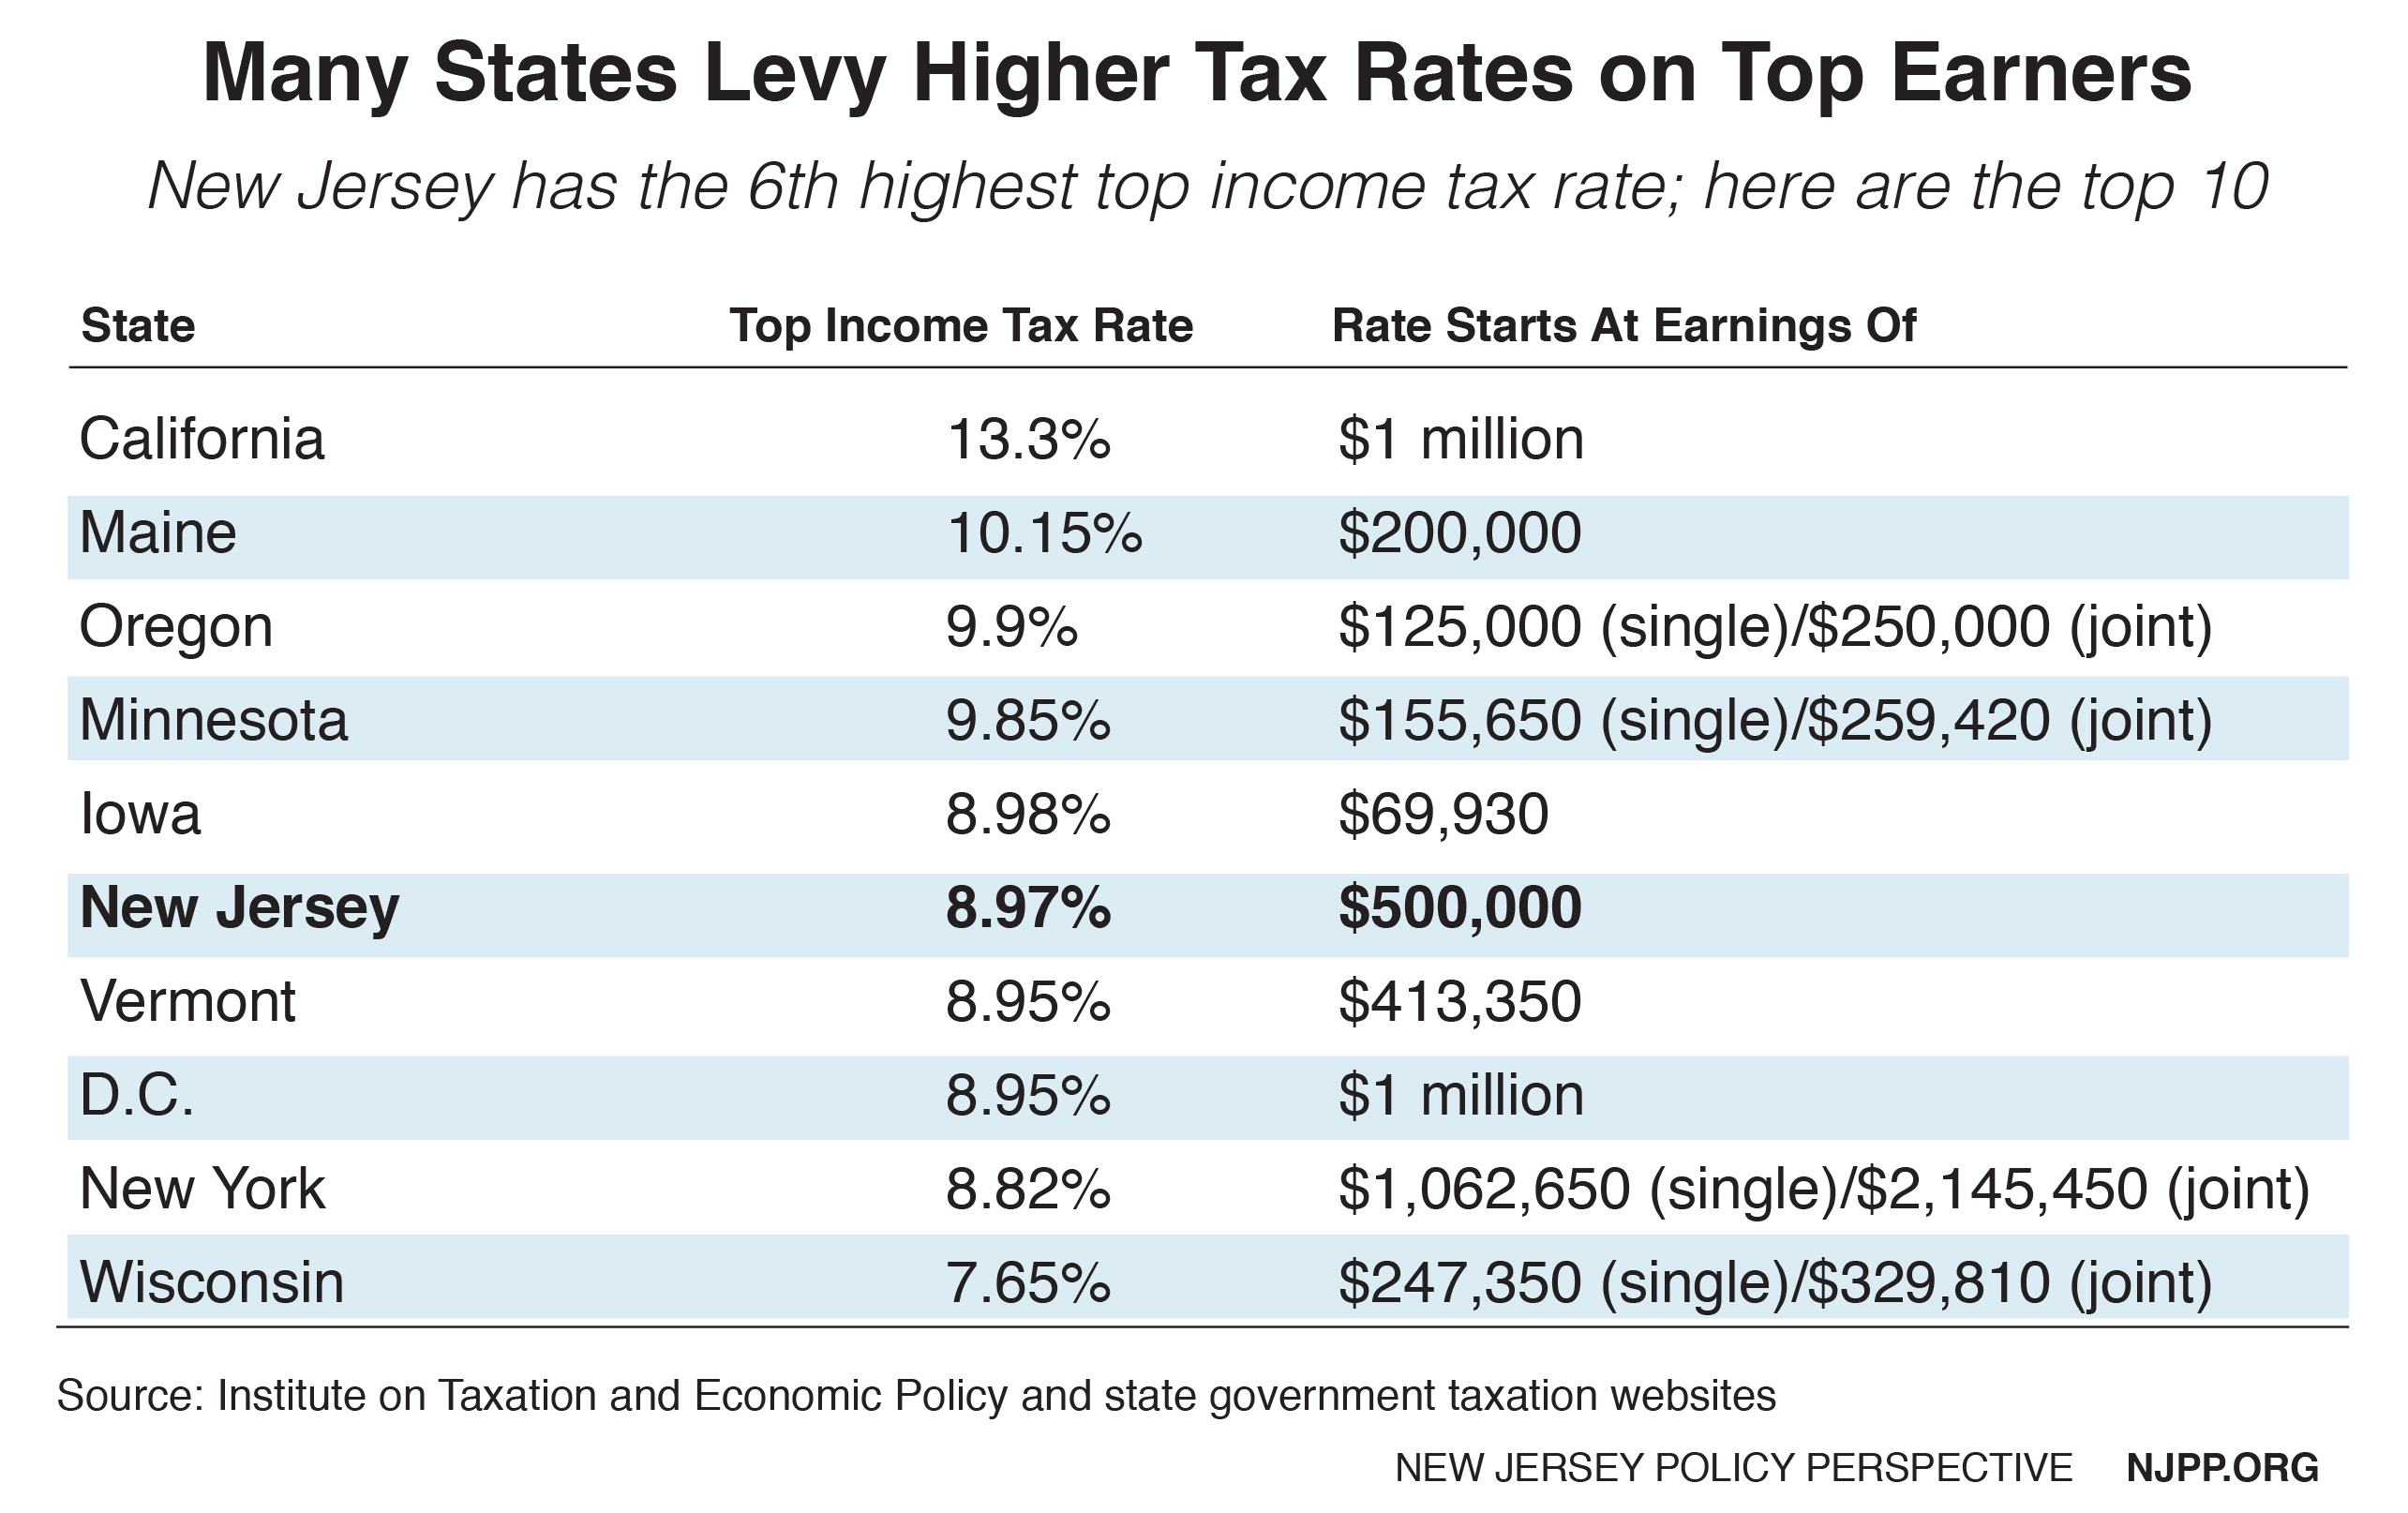 New York State Tax Chart